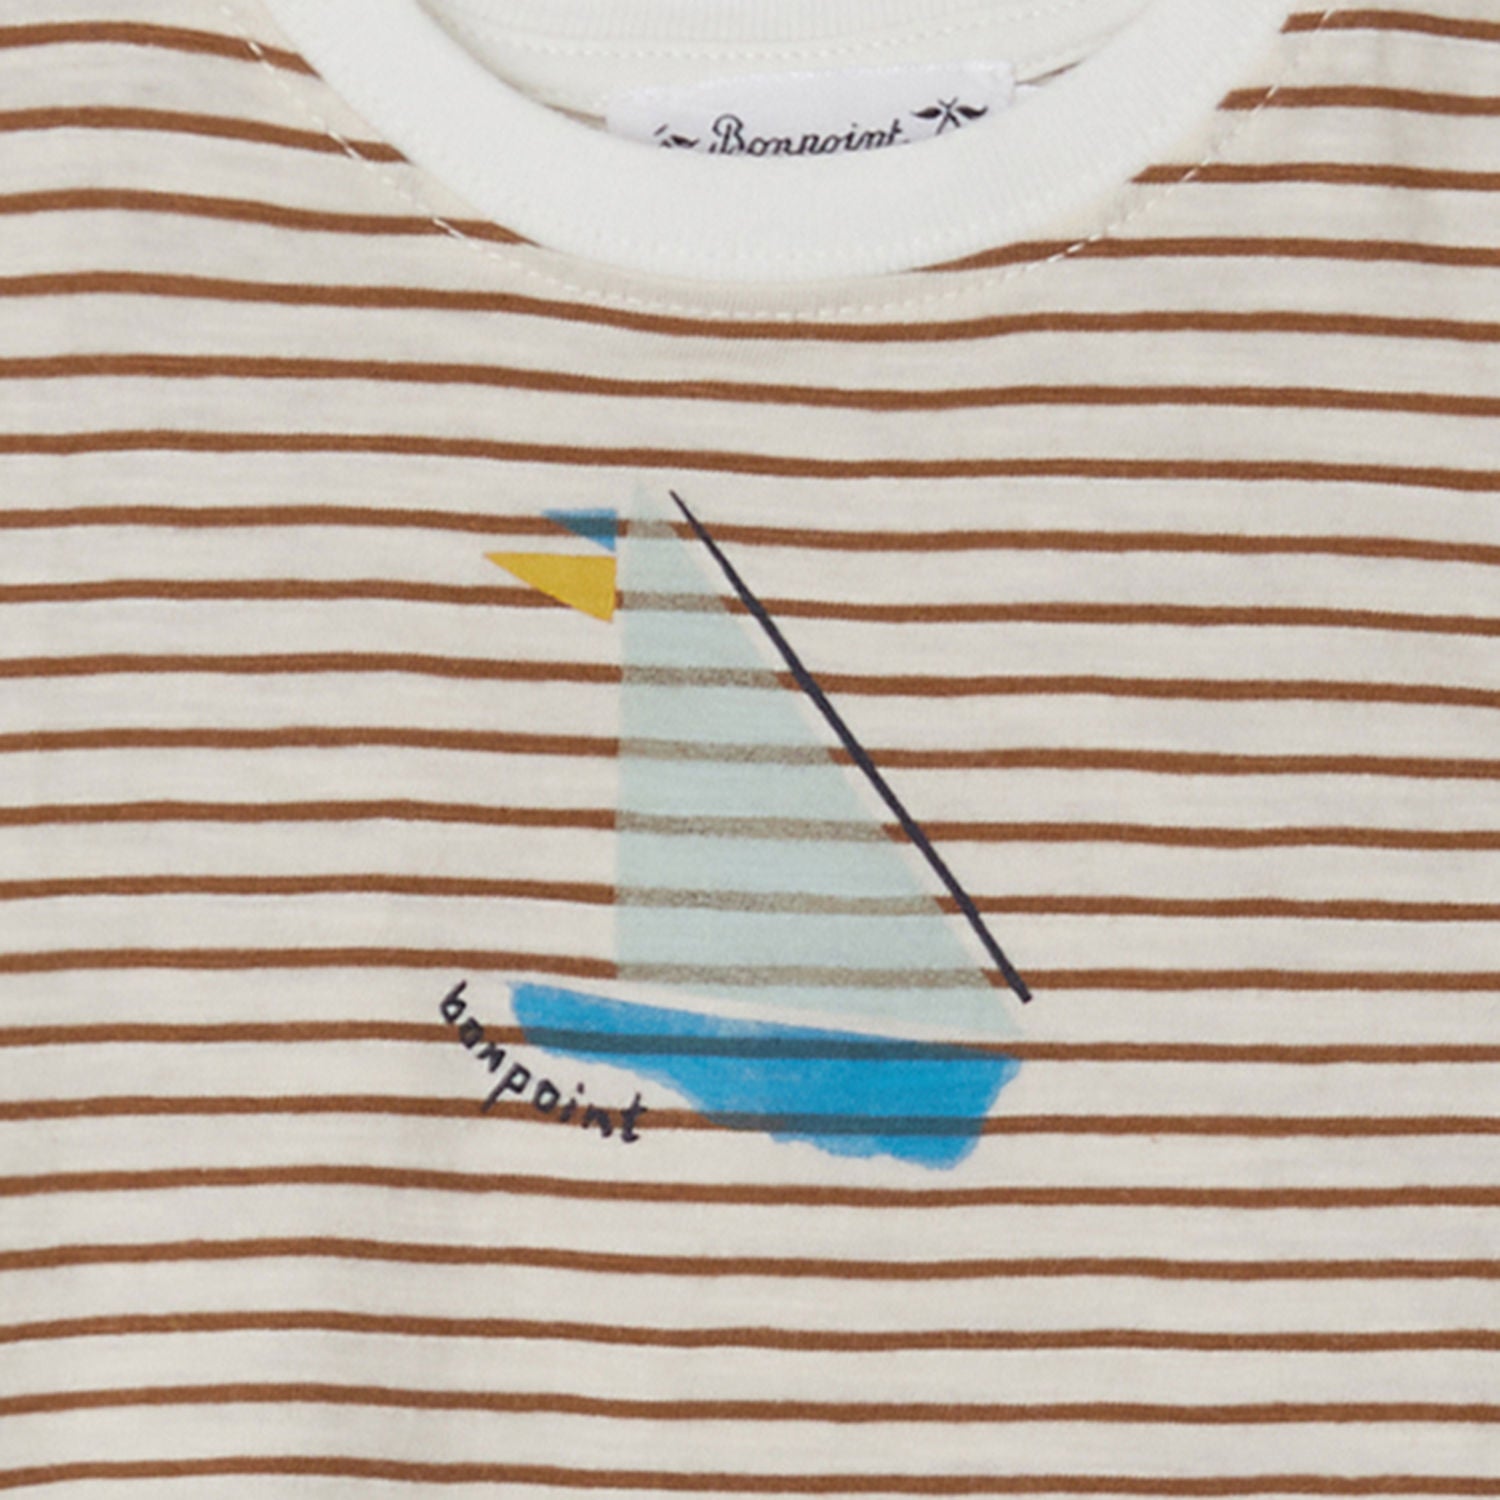 Baby Boys Caramel Stripes Cotton T-Shirt